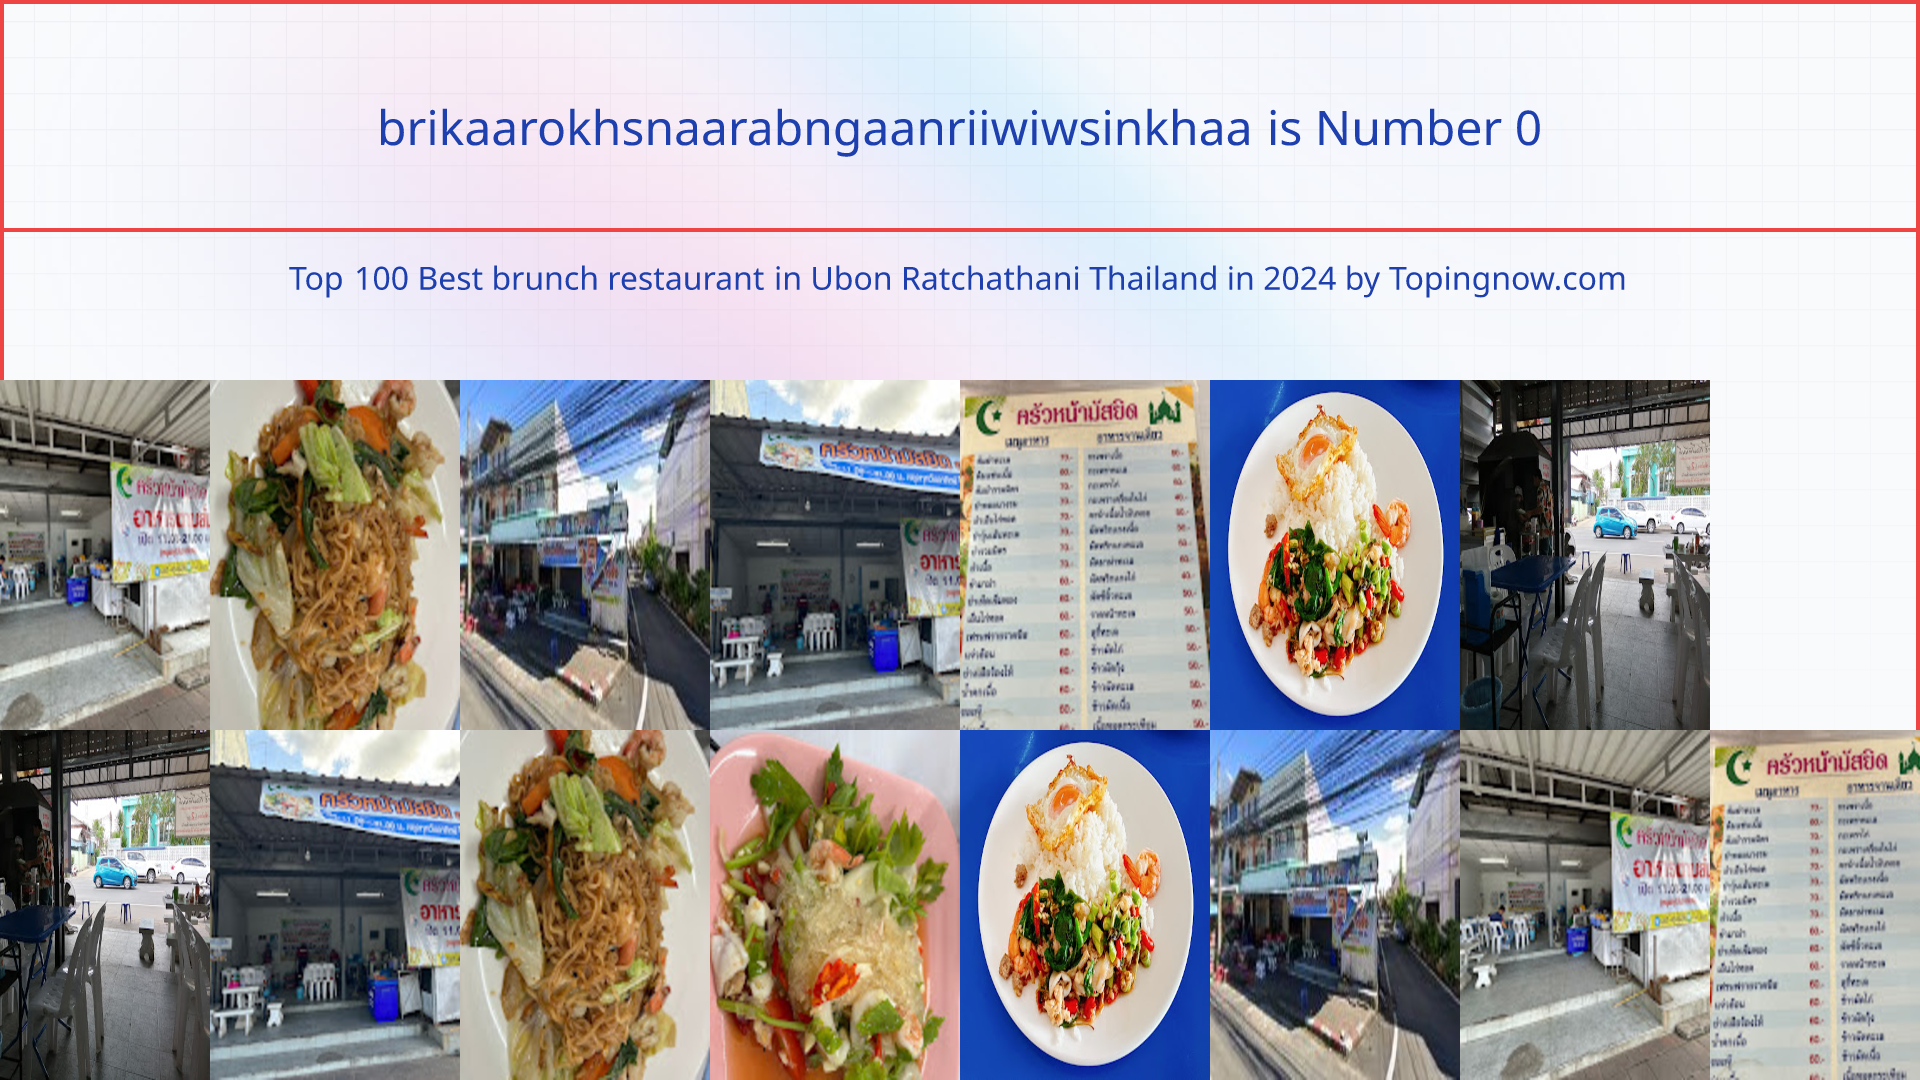 brikaarokhsnaarabngaanriiwiwsinkhaa: Top 100 Best brunch restaurant in Ubon Ratchathani Thailand in 2024